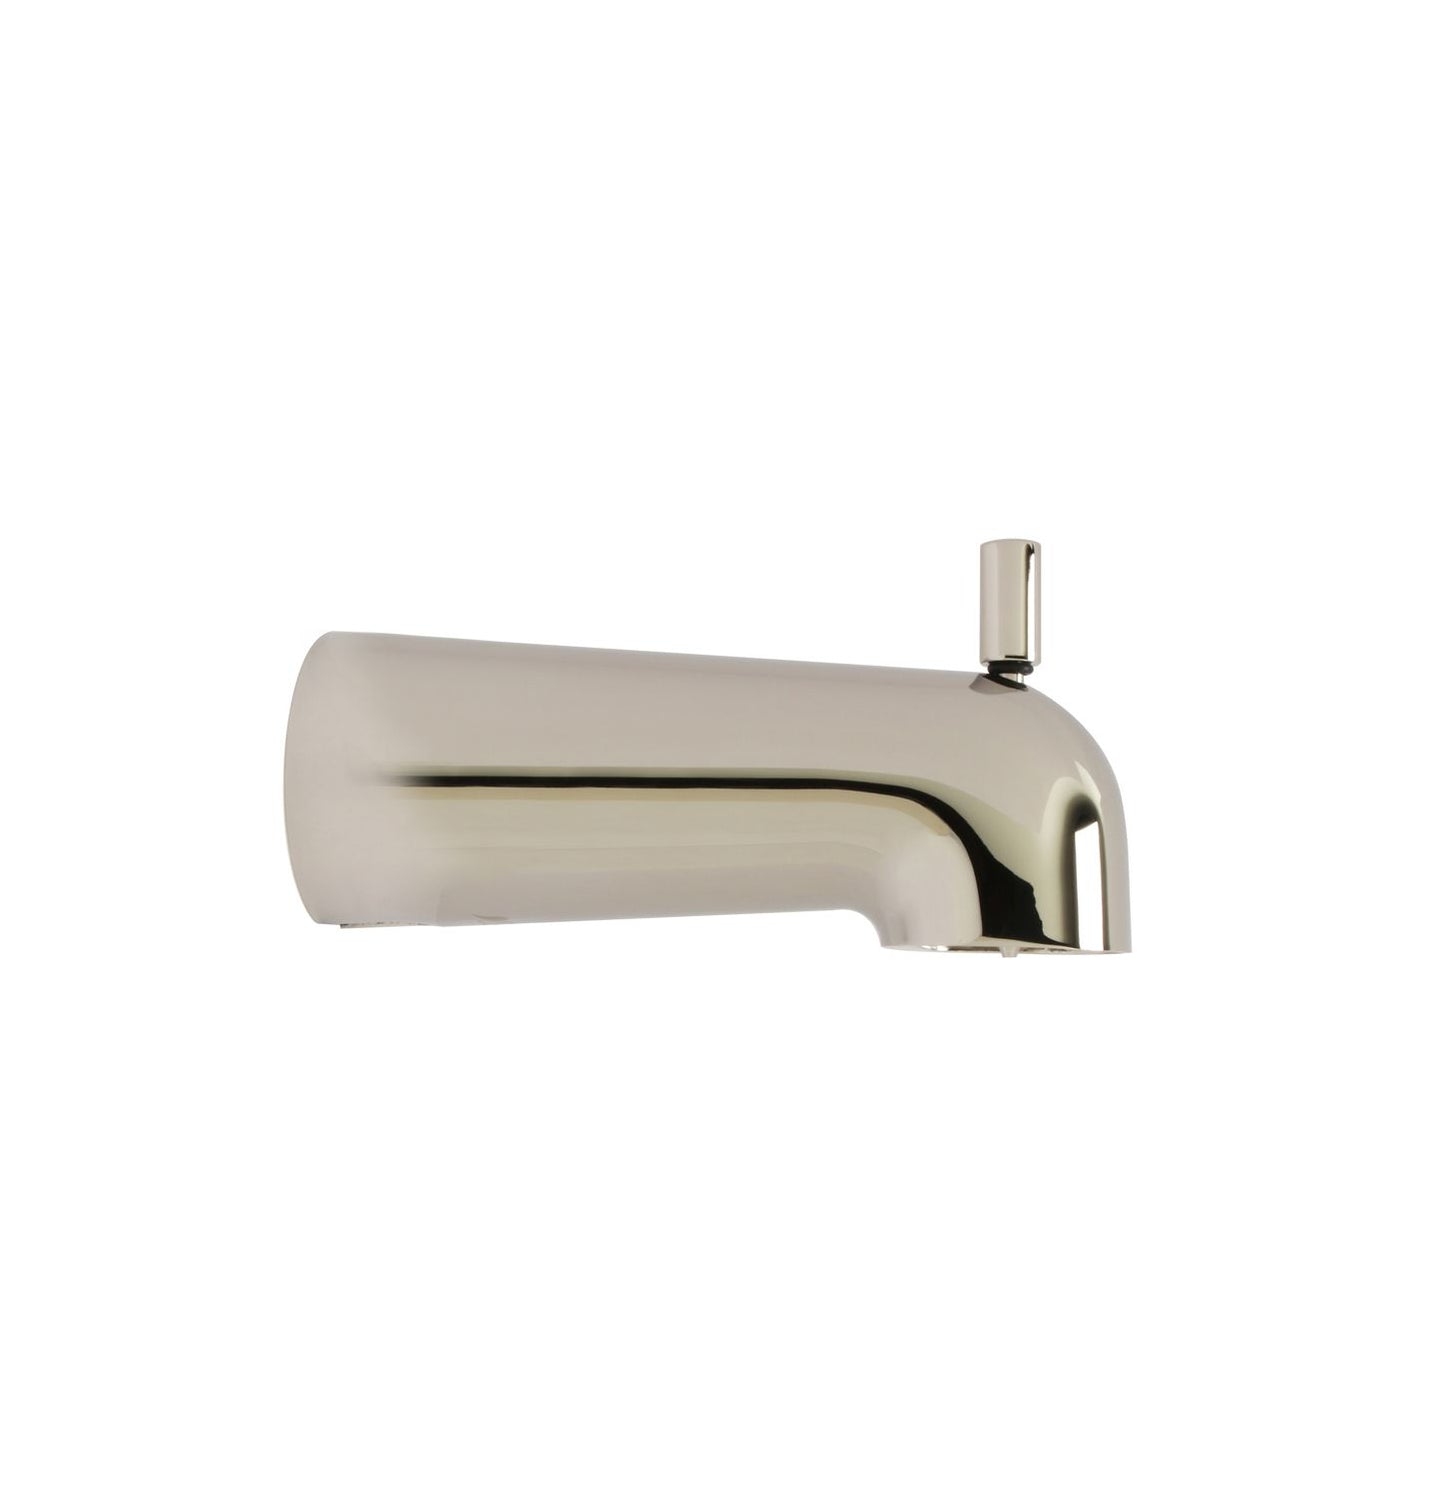 Huntington Brass Diverter Tub Spout P0229514